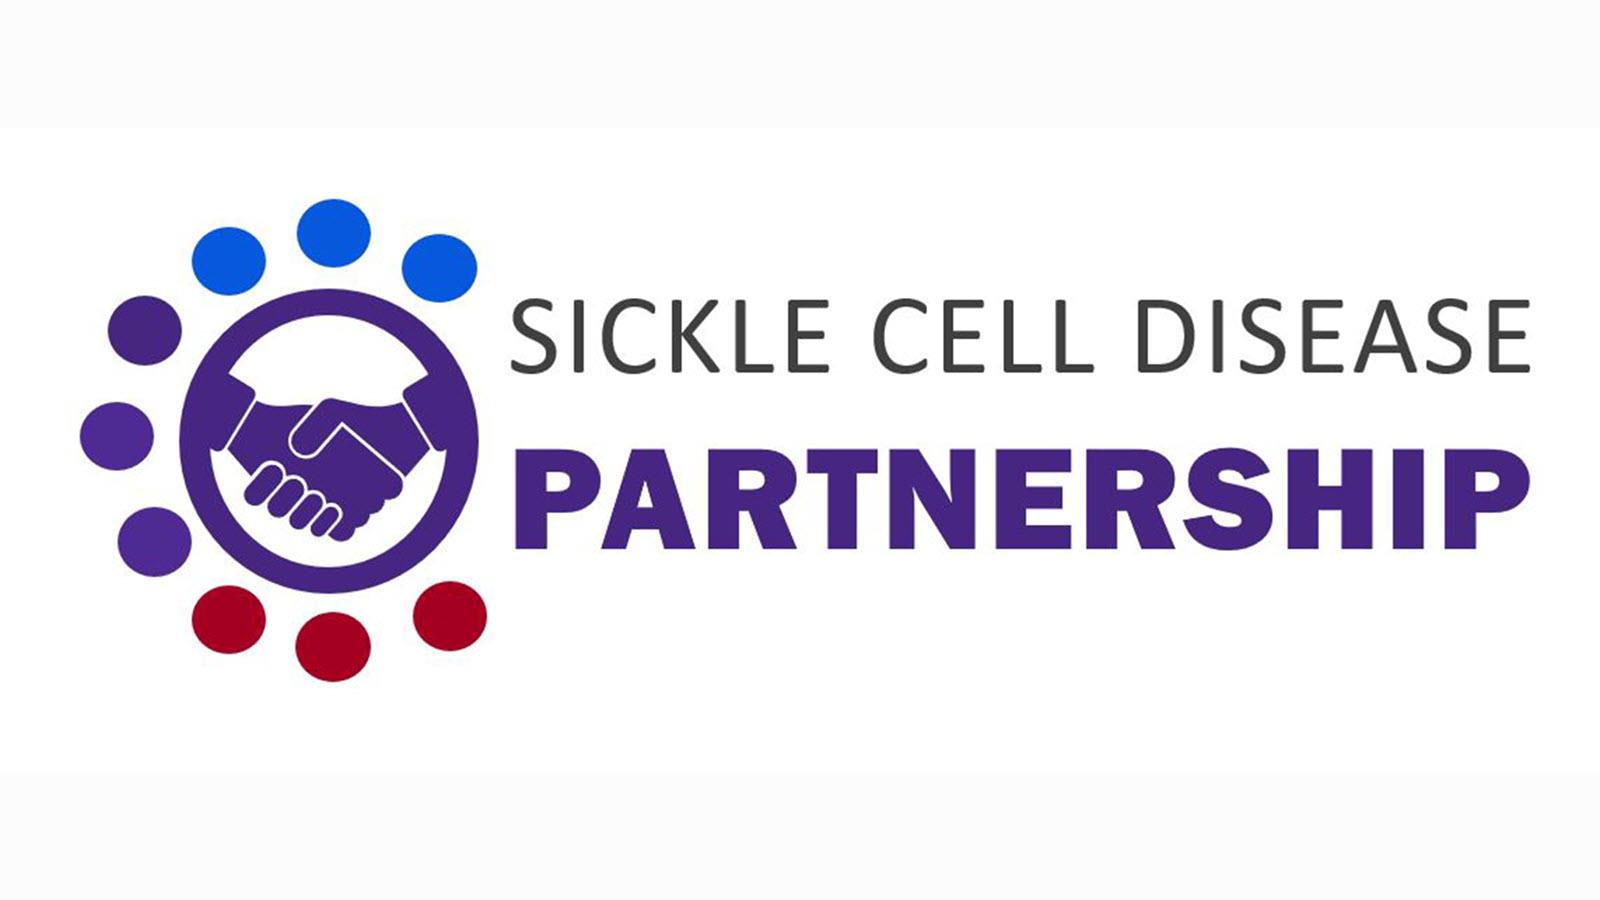 Sickle Cell Disease Partnership logo with handshake illustration